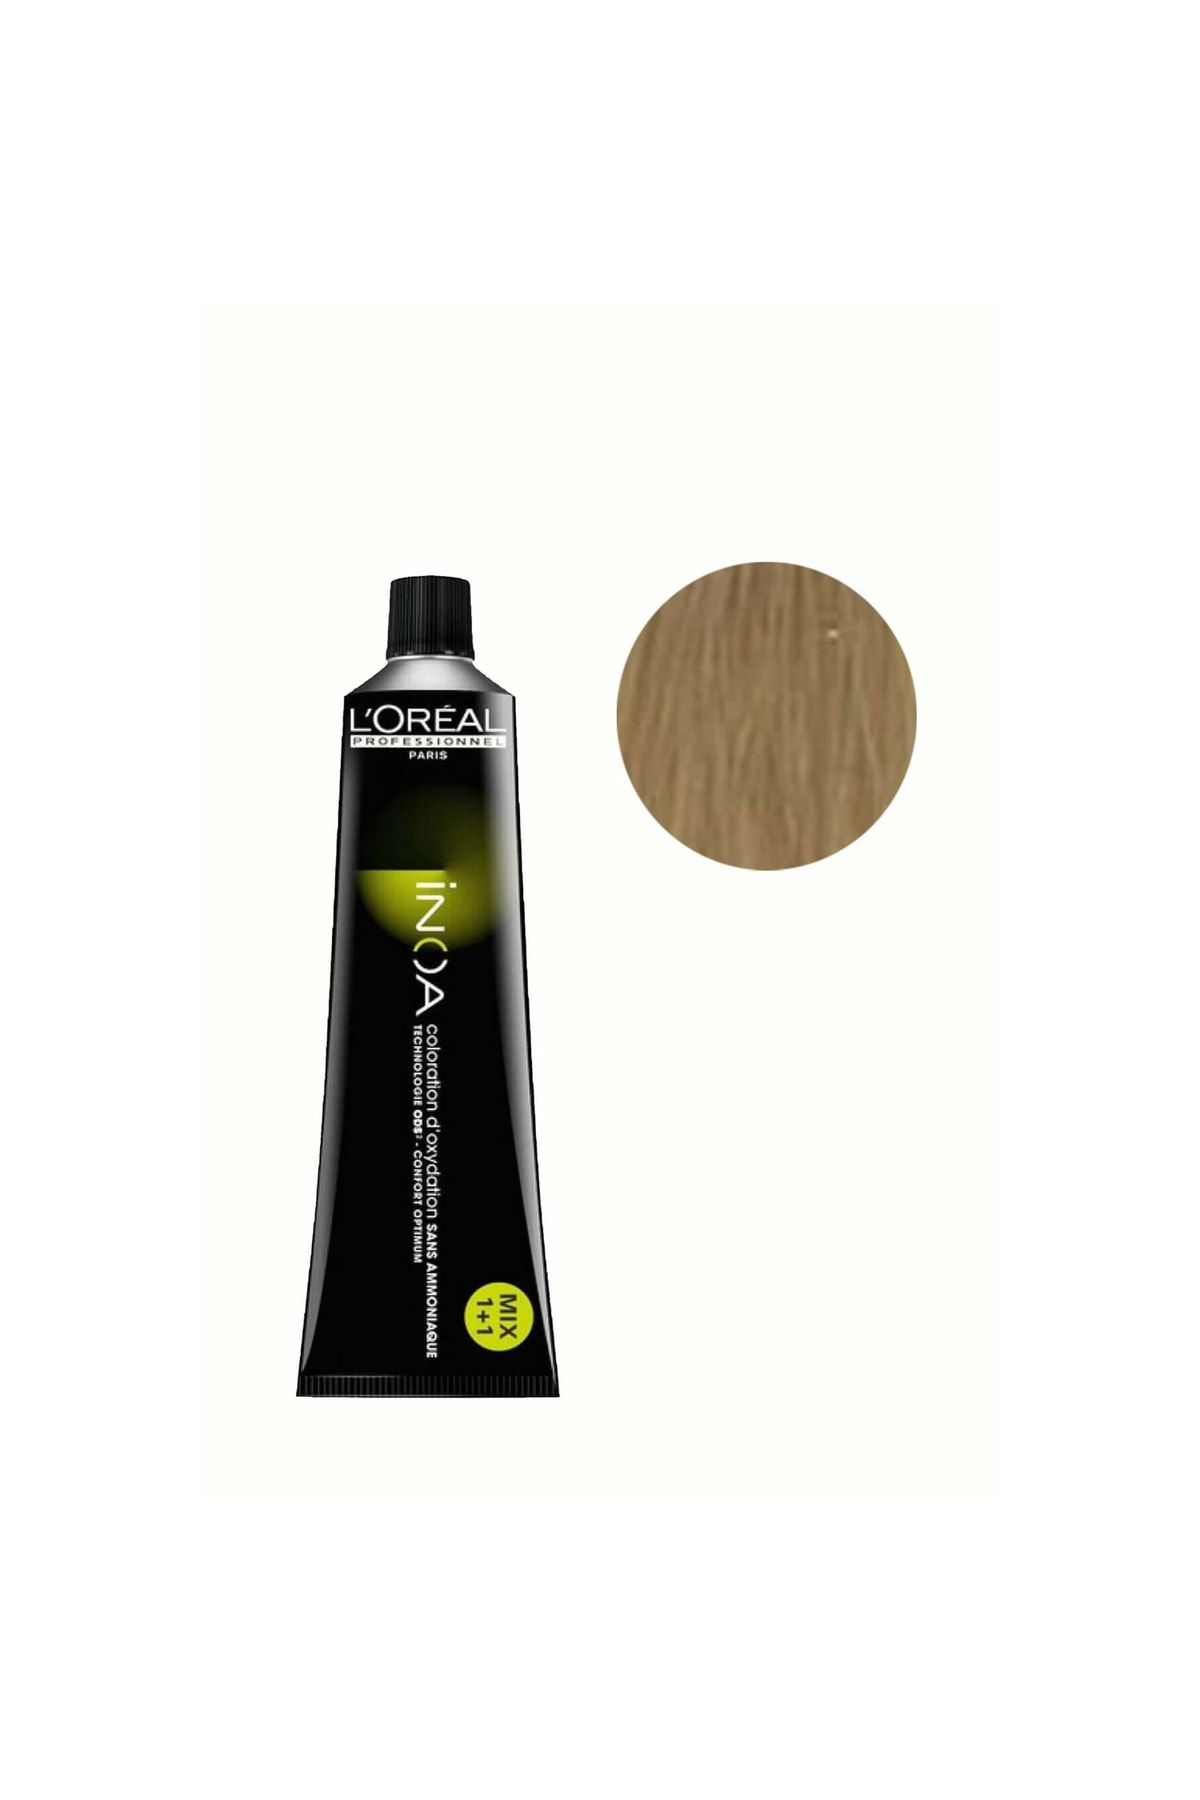 L'oreal Professionnel Inoa 10 Natural Light Blonde Defined Bright Ammonia Free Oil Based Permament Hair Color Cream 60ml